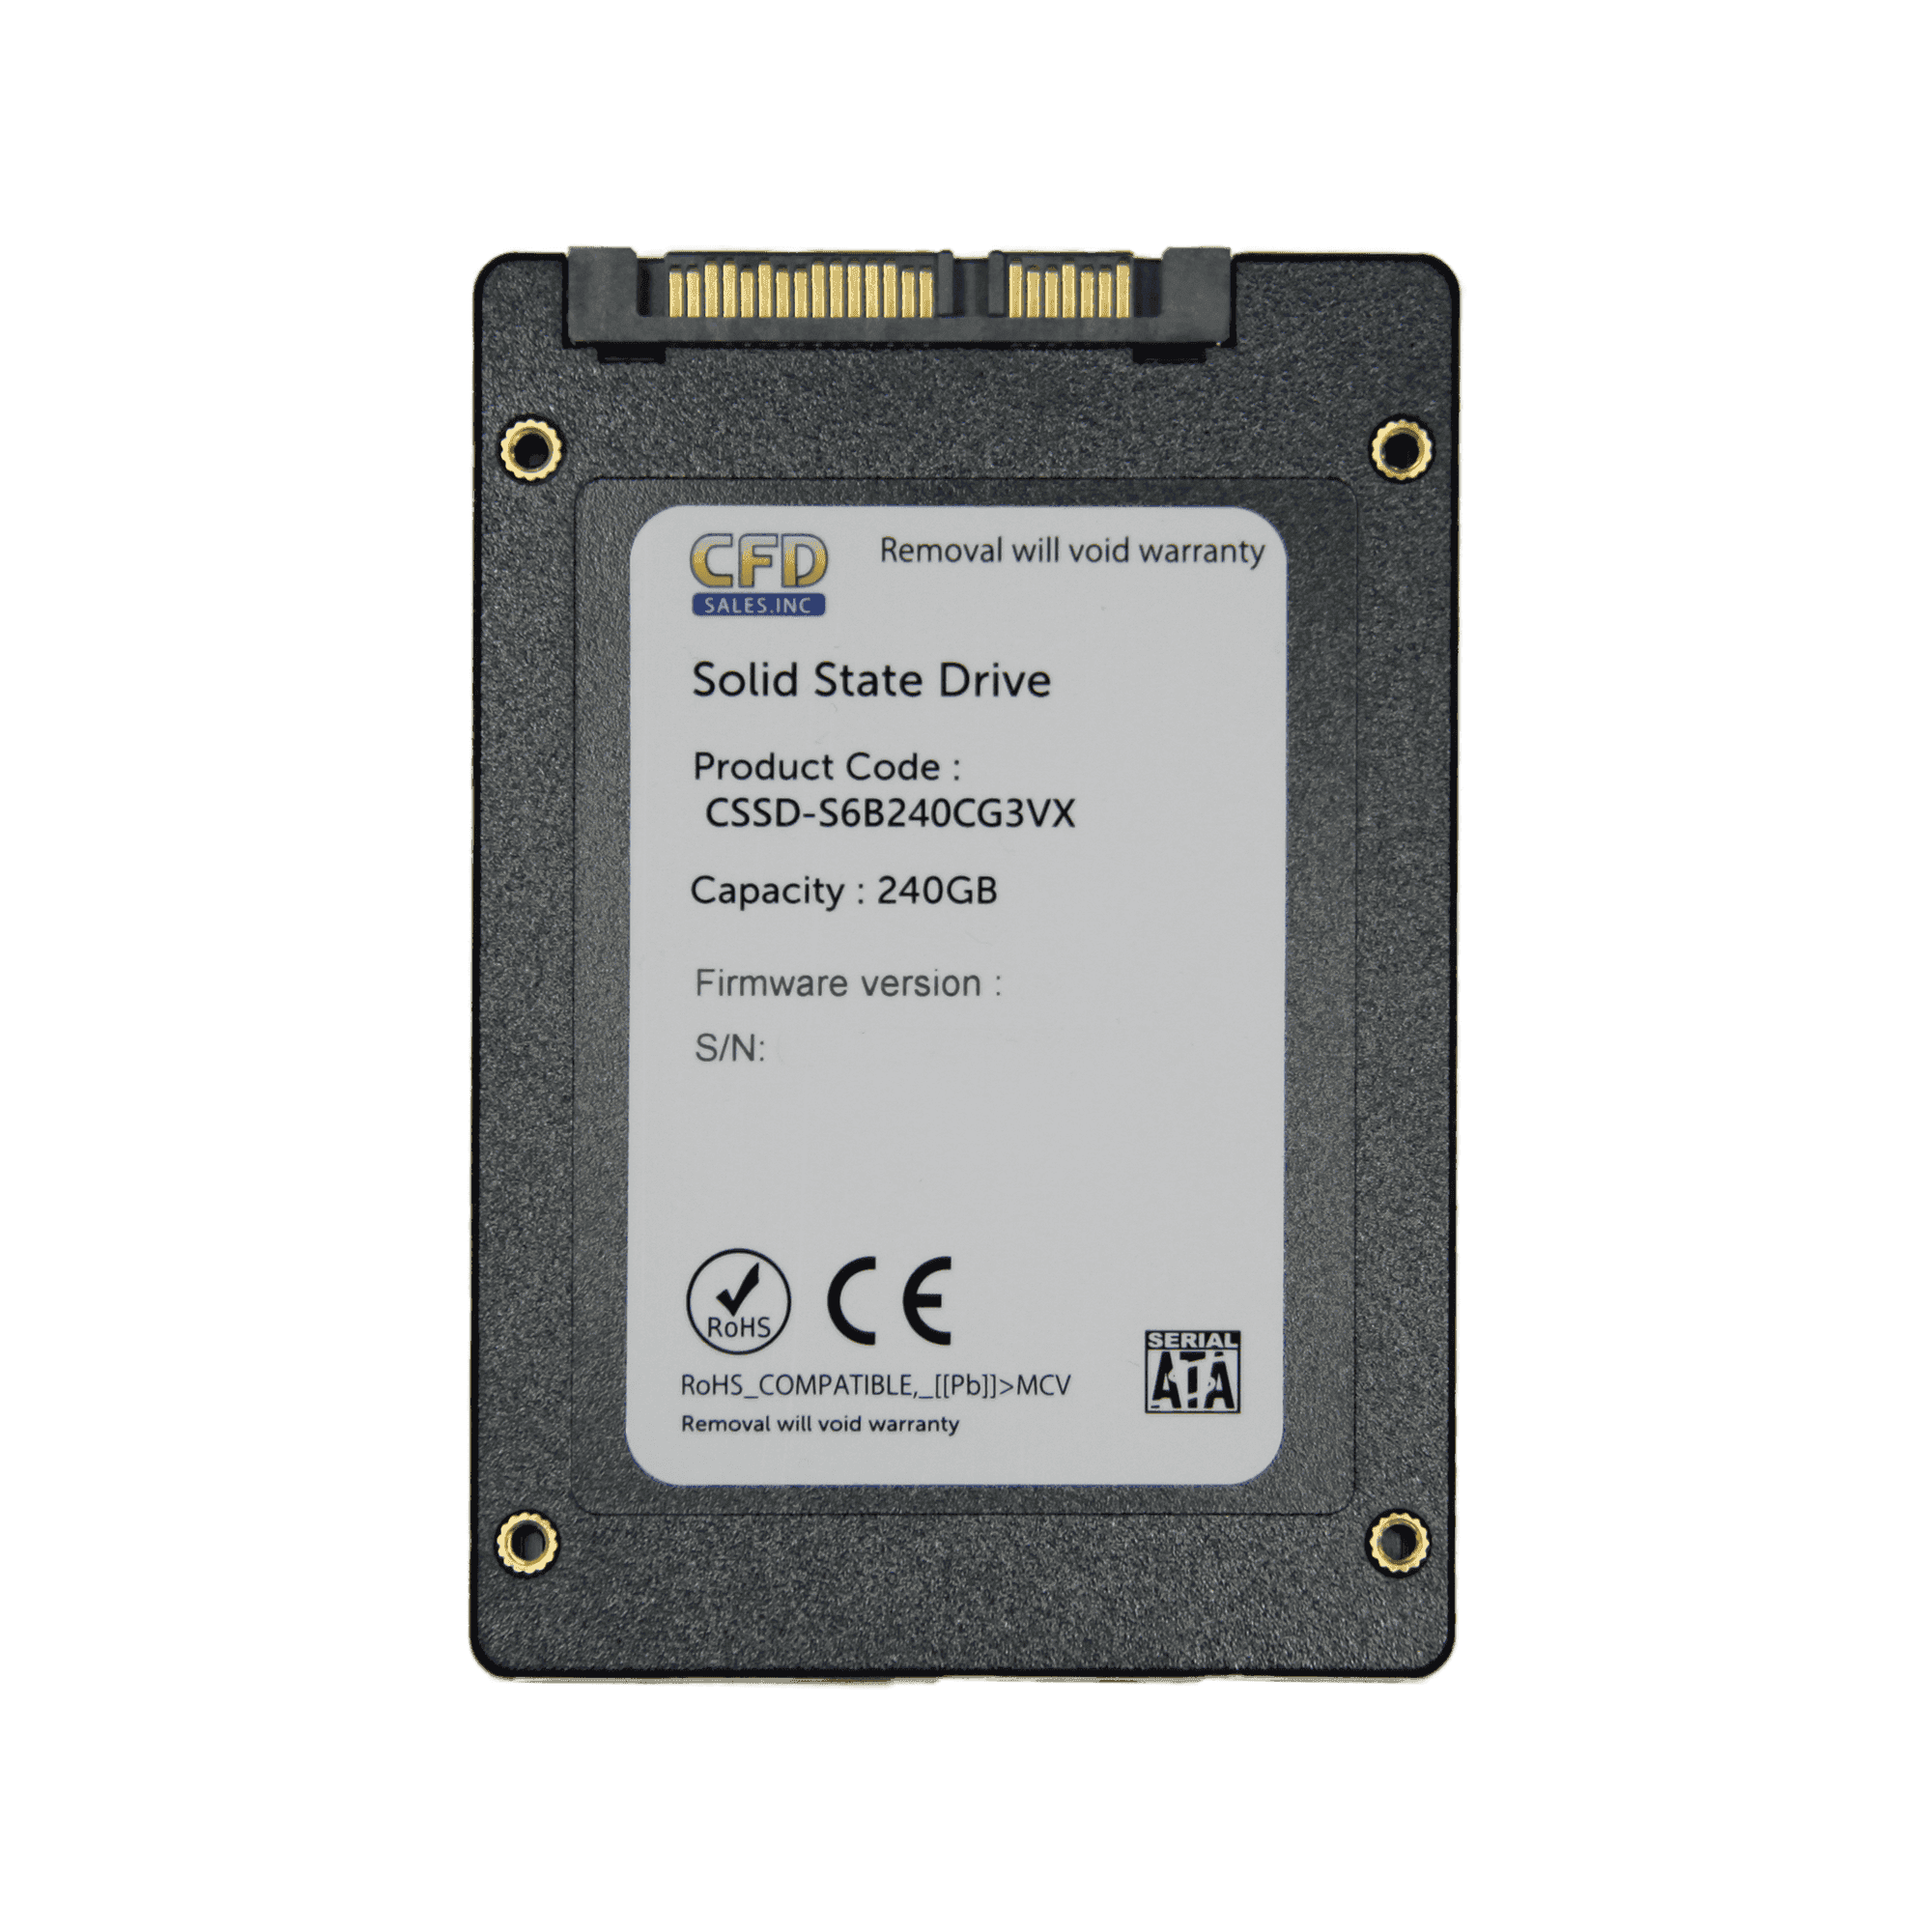 CFD販売 SSD 内蔵2.5インチ SATA接続 CG3VX シリーズ 240GB CSSD-S6B240CG3VX - 3